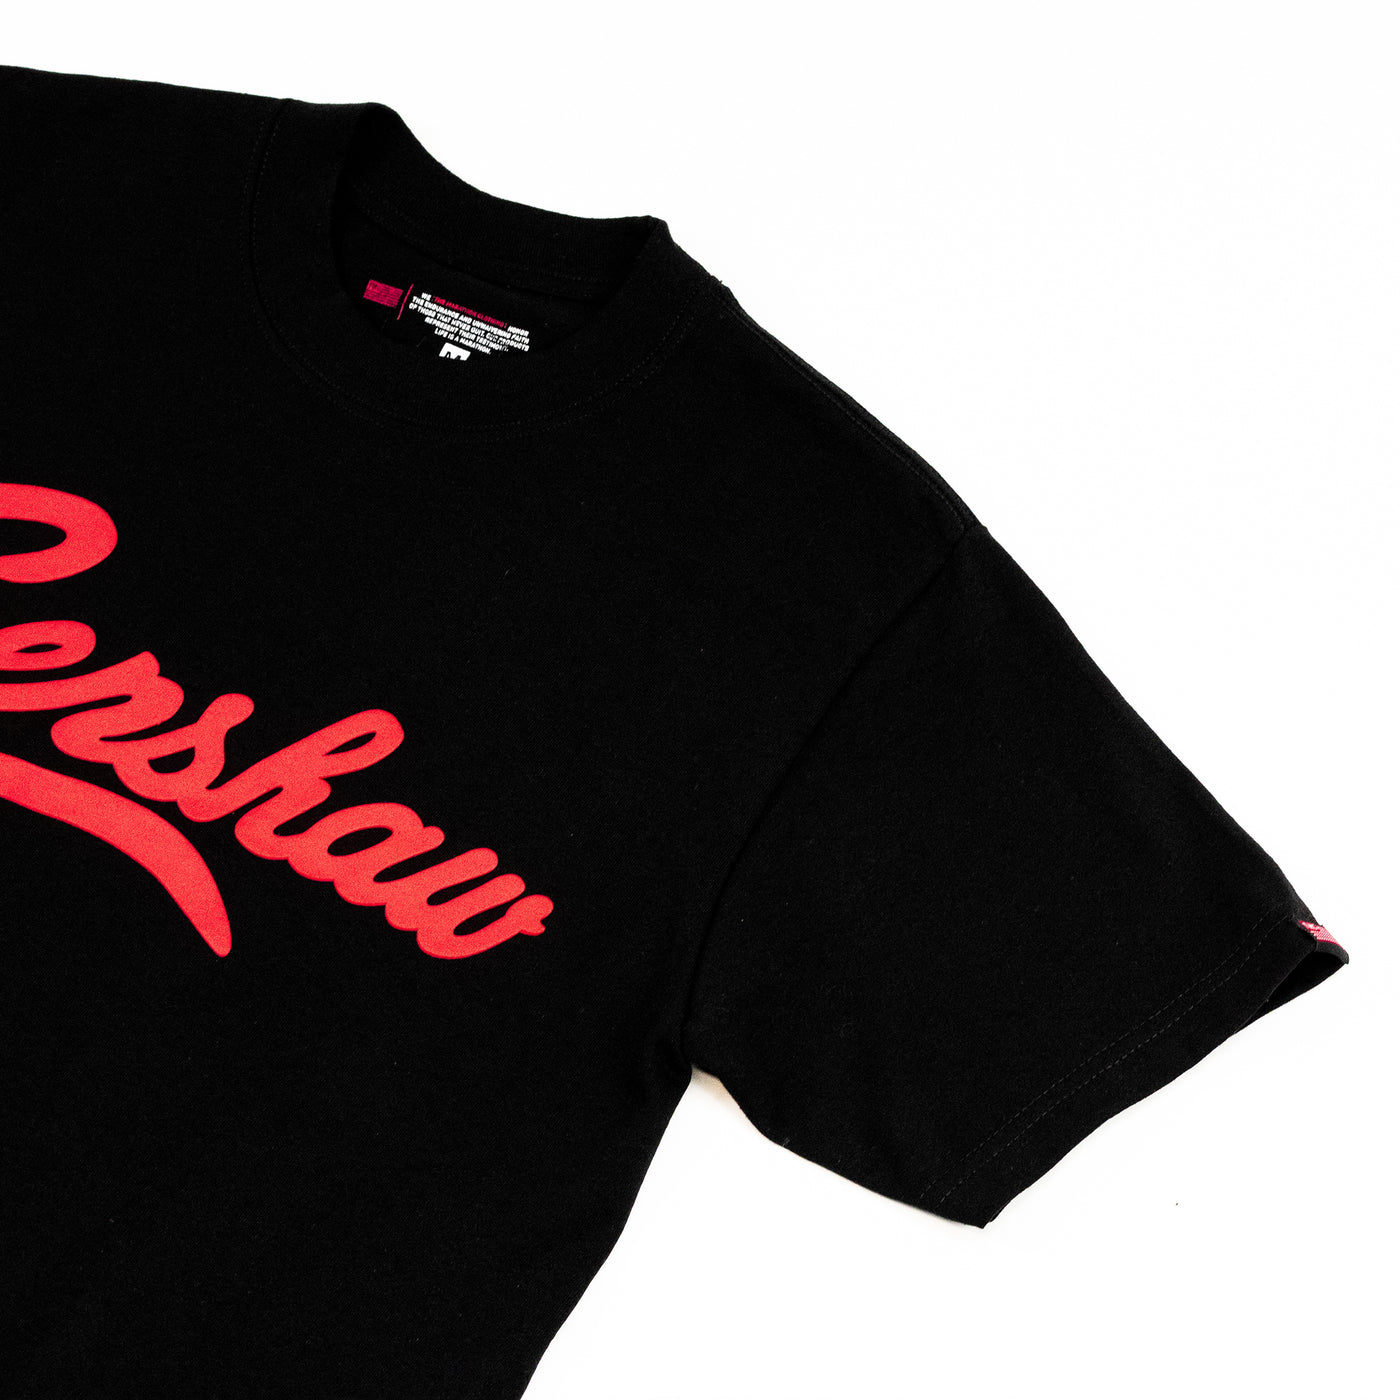 Crenshaw T-Shirt - Black/Red - Sleeve